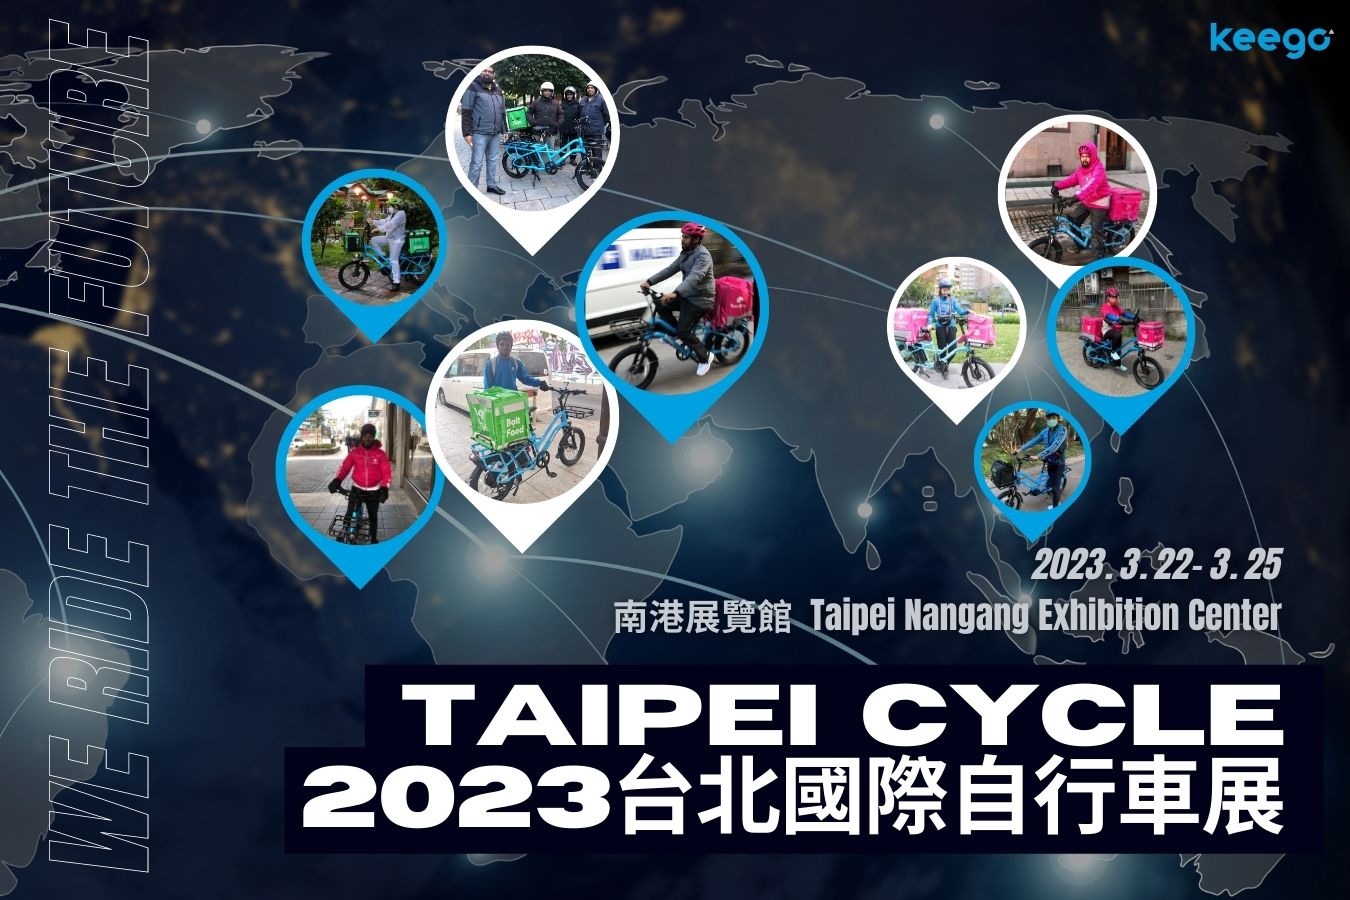 Keego joining Taipei Cycle - Keego Mobility